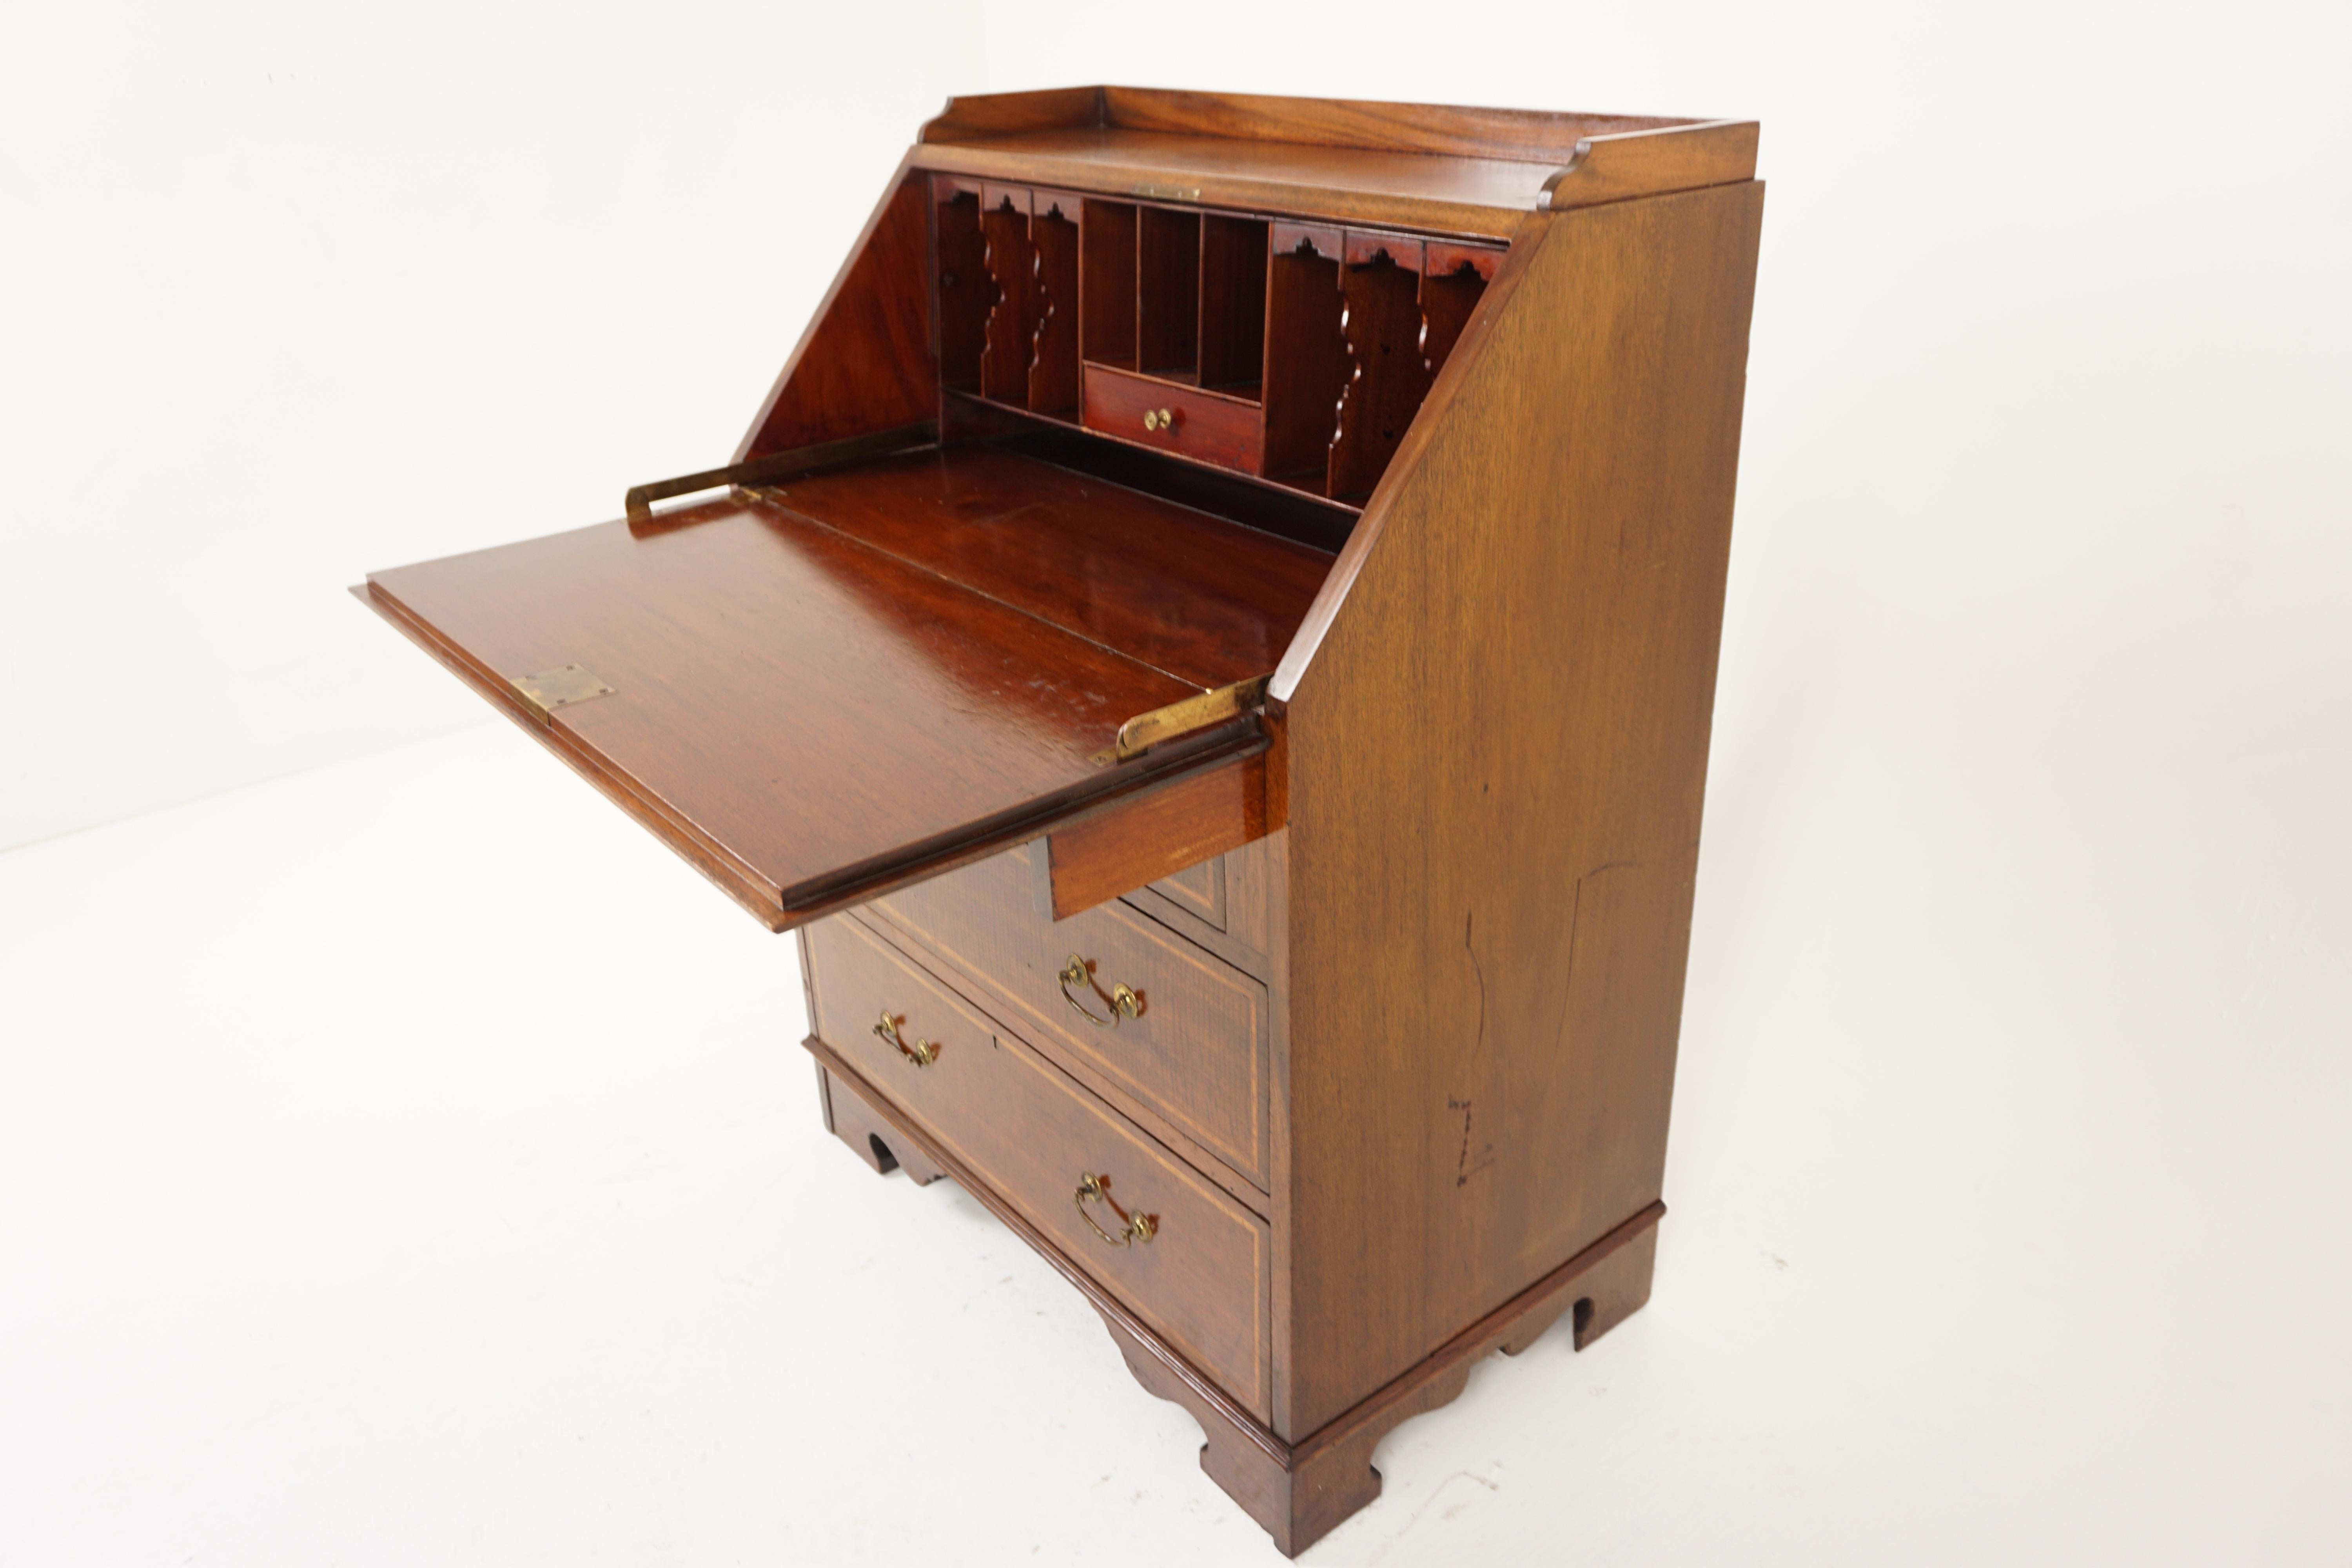 Hand-Crafted Antique Walnut Desk, Slant Front Desk, Drop Front Bureau, Scotland 1910 For Sale